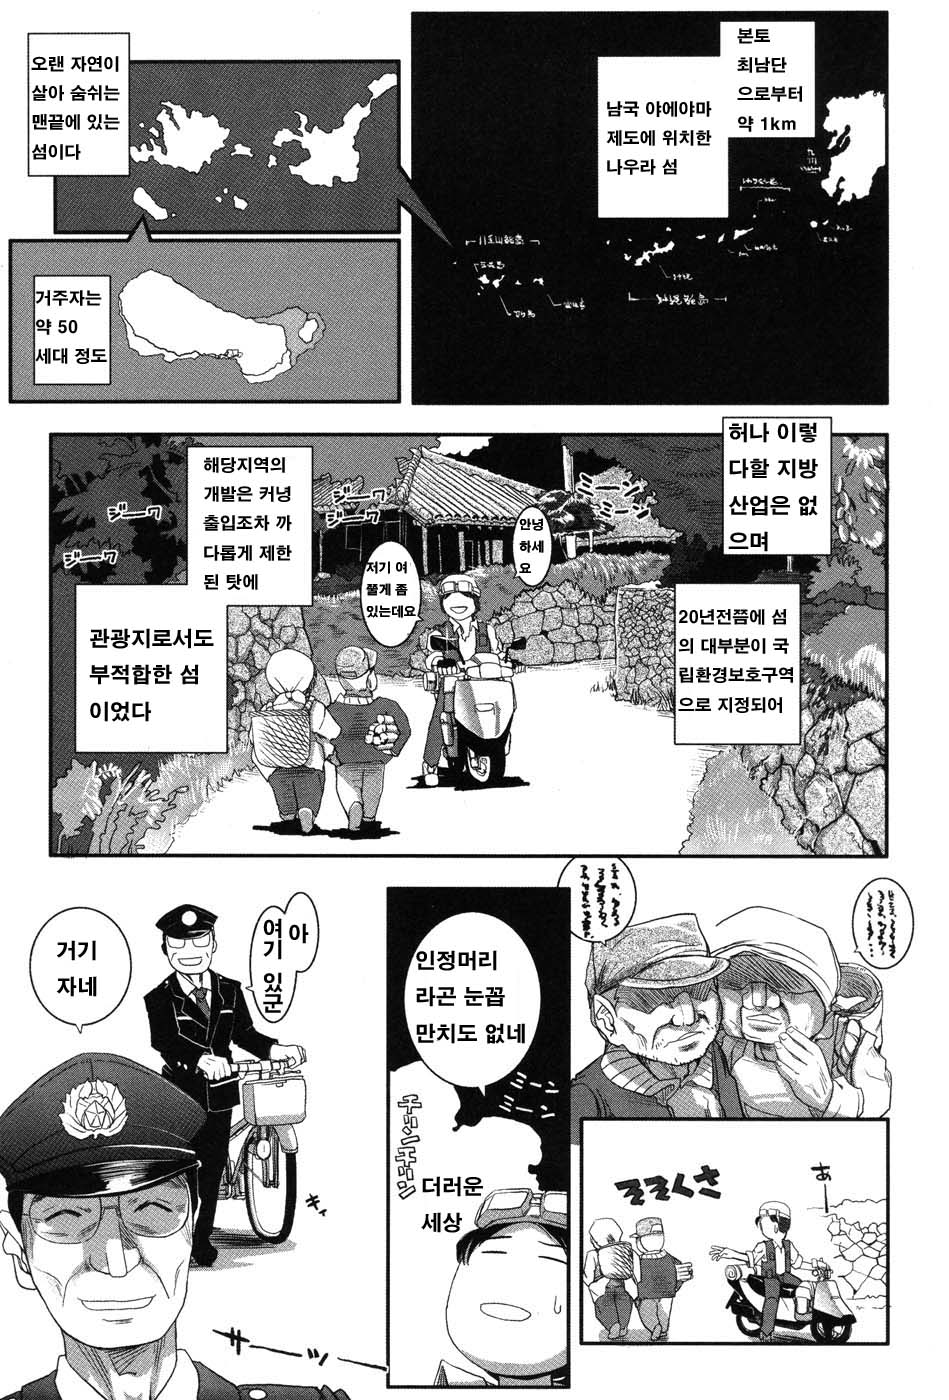 [Kirie Masanobu] LeviAThaN2 (korean) - Page 12